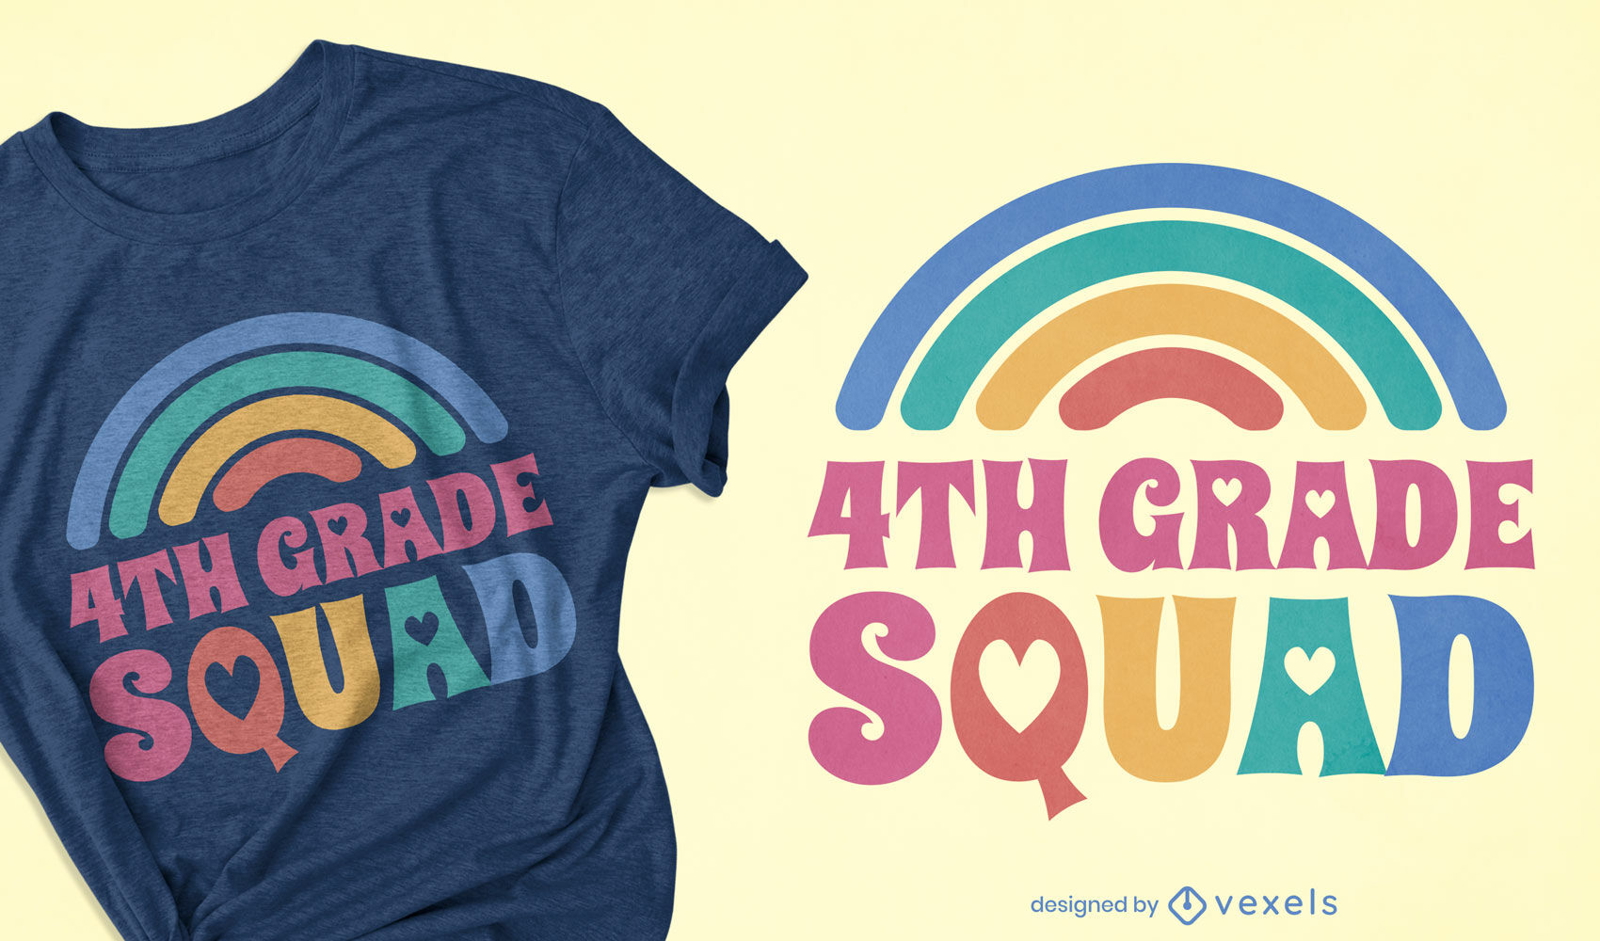 4th grade squad t-shirt design